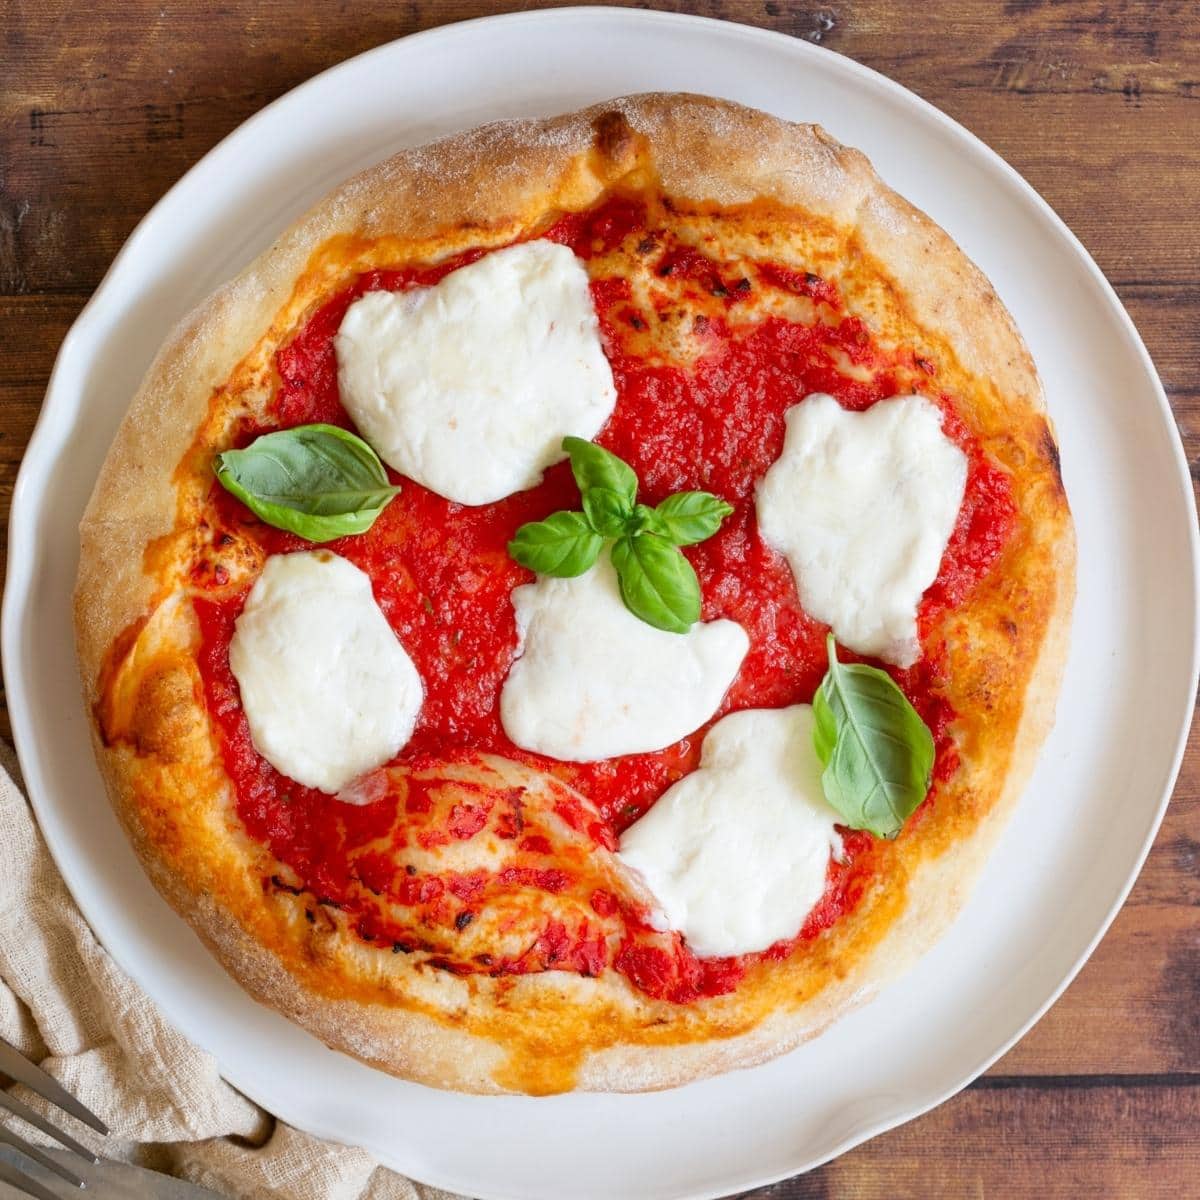 https://www.thepetitecook.com/wp-content/uploads/2020/06/homemade-pizza-dough-recipe.jpg